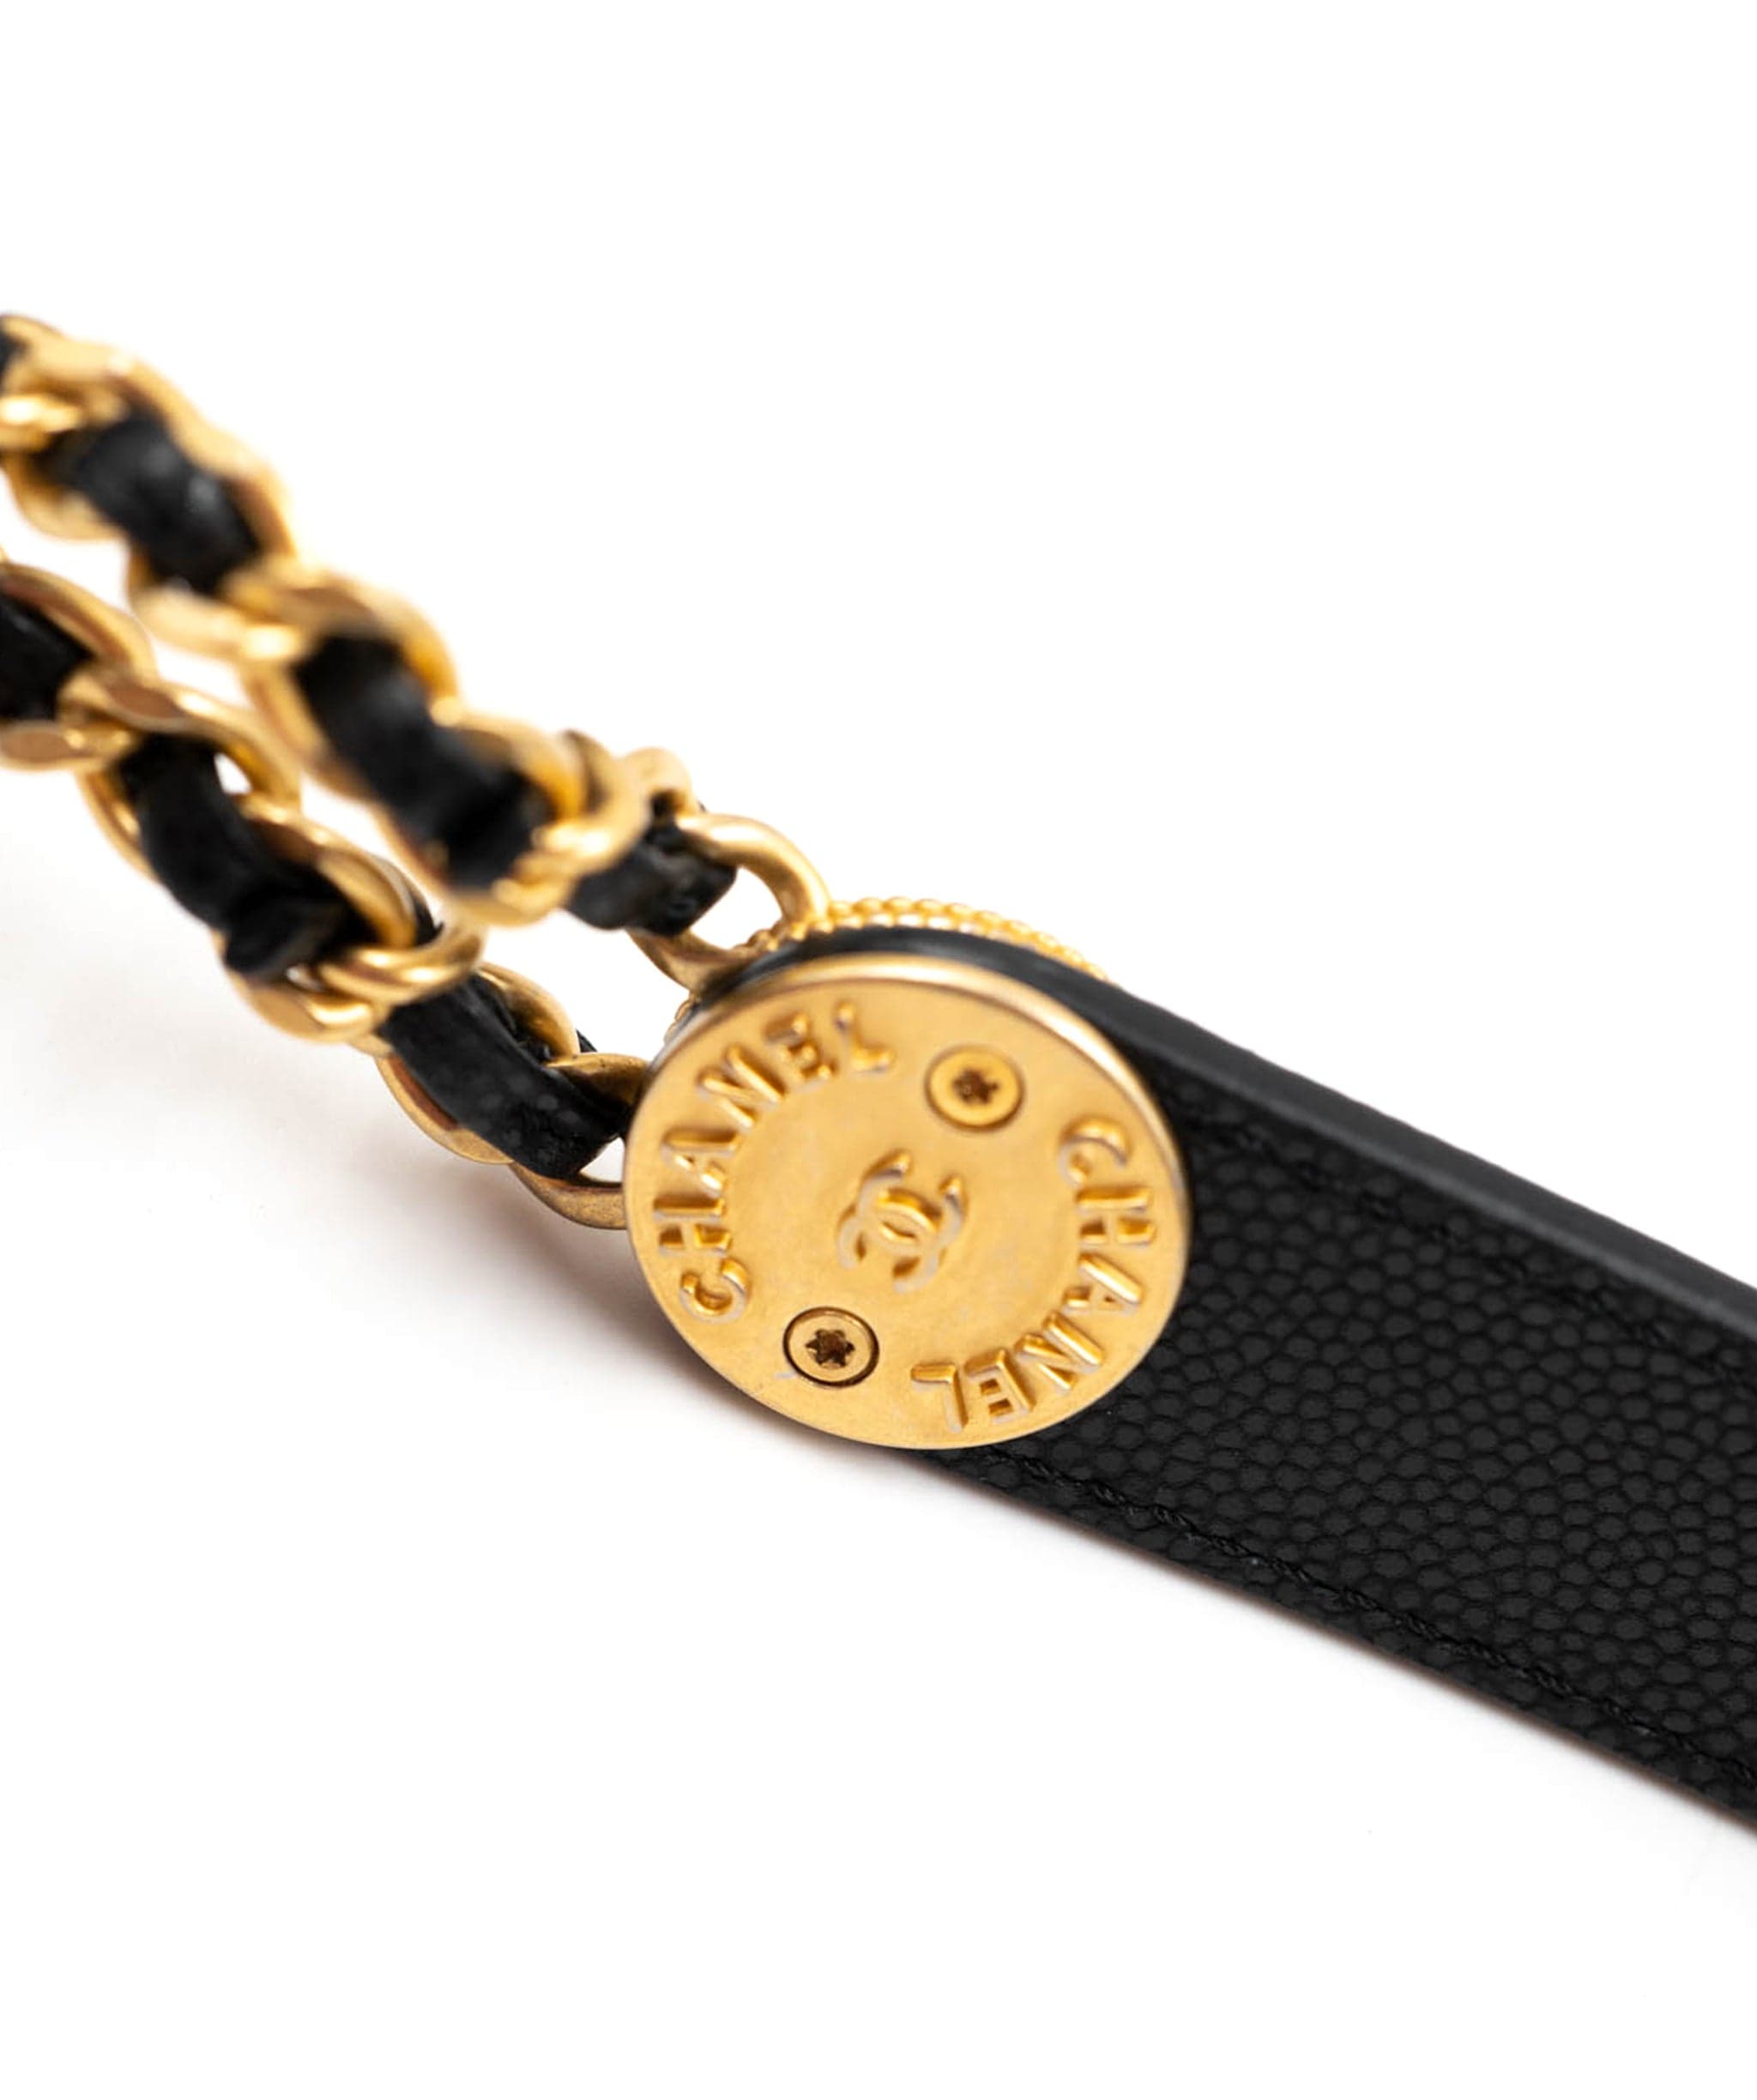 Chanel Chanel Caviar medallion bag  ALC0111